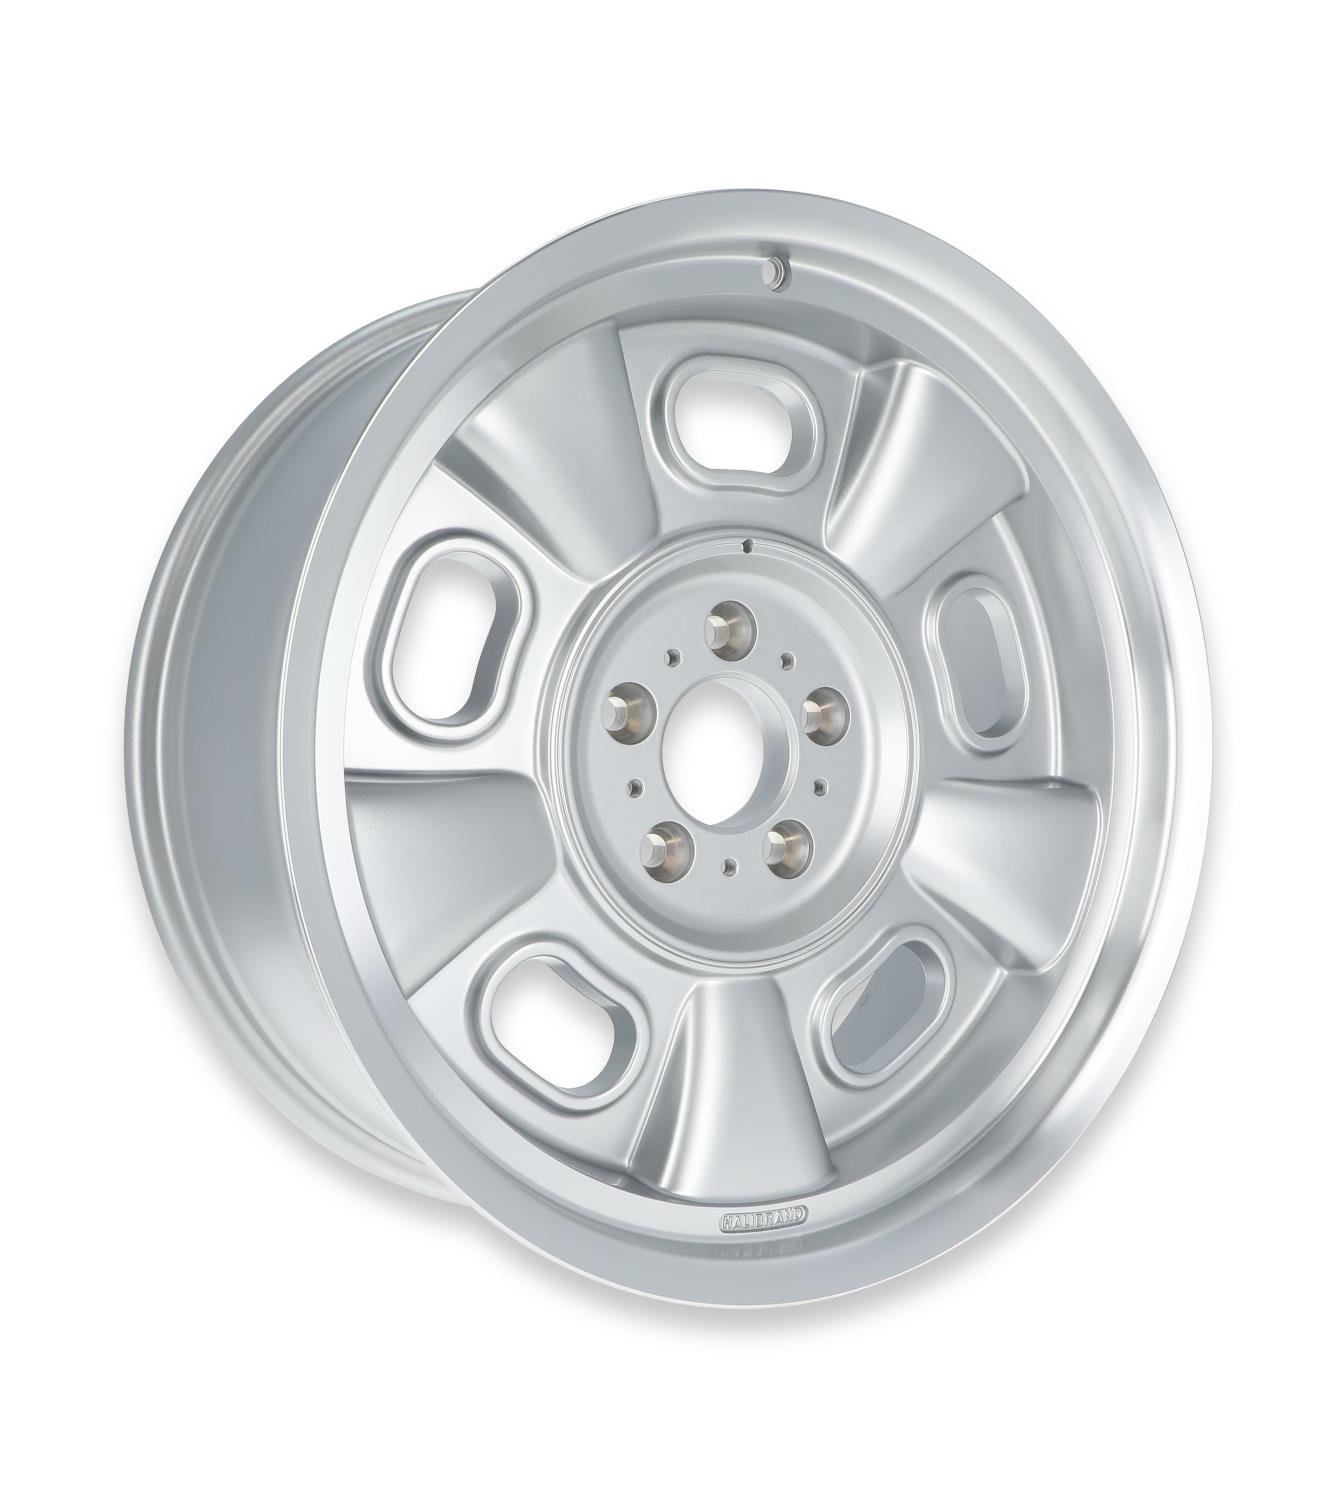 Indy Roadster Wheel, Size: 20x8.5", Bolt Pattern: 5x5", Backspace: 5.25" [Silver Machined - Semi Gloss Clearcoat]